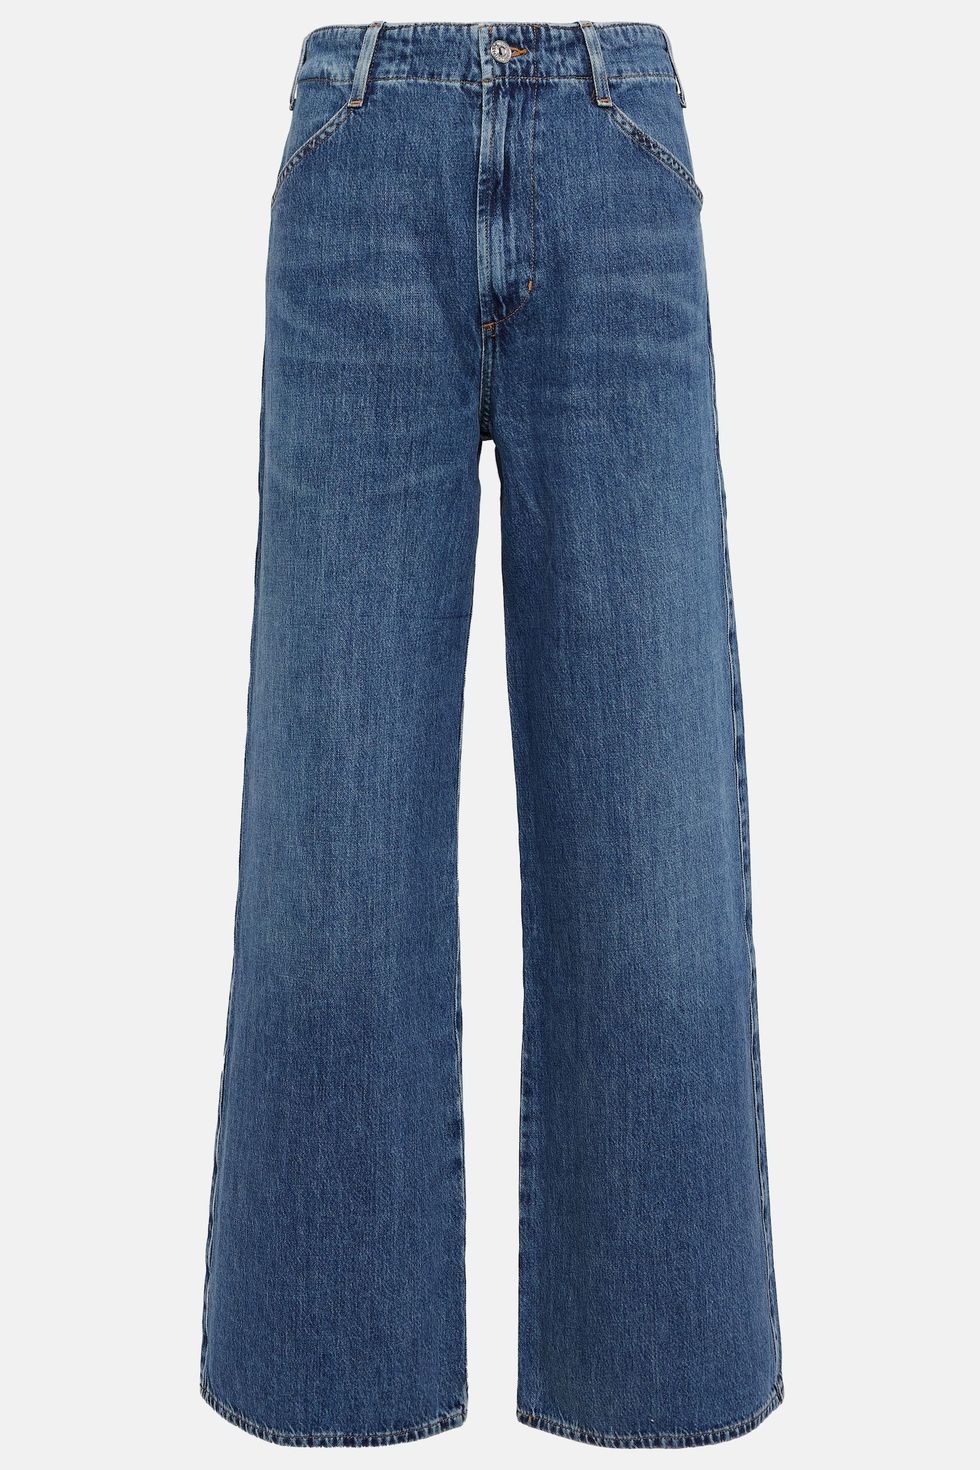 DECIVI Women Wide Leg Capris Jeans High Rise Cropped Denim Pants Loose Fit  Ankle Length with Pockets Blue at  Women's Jeans store